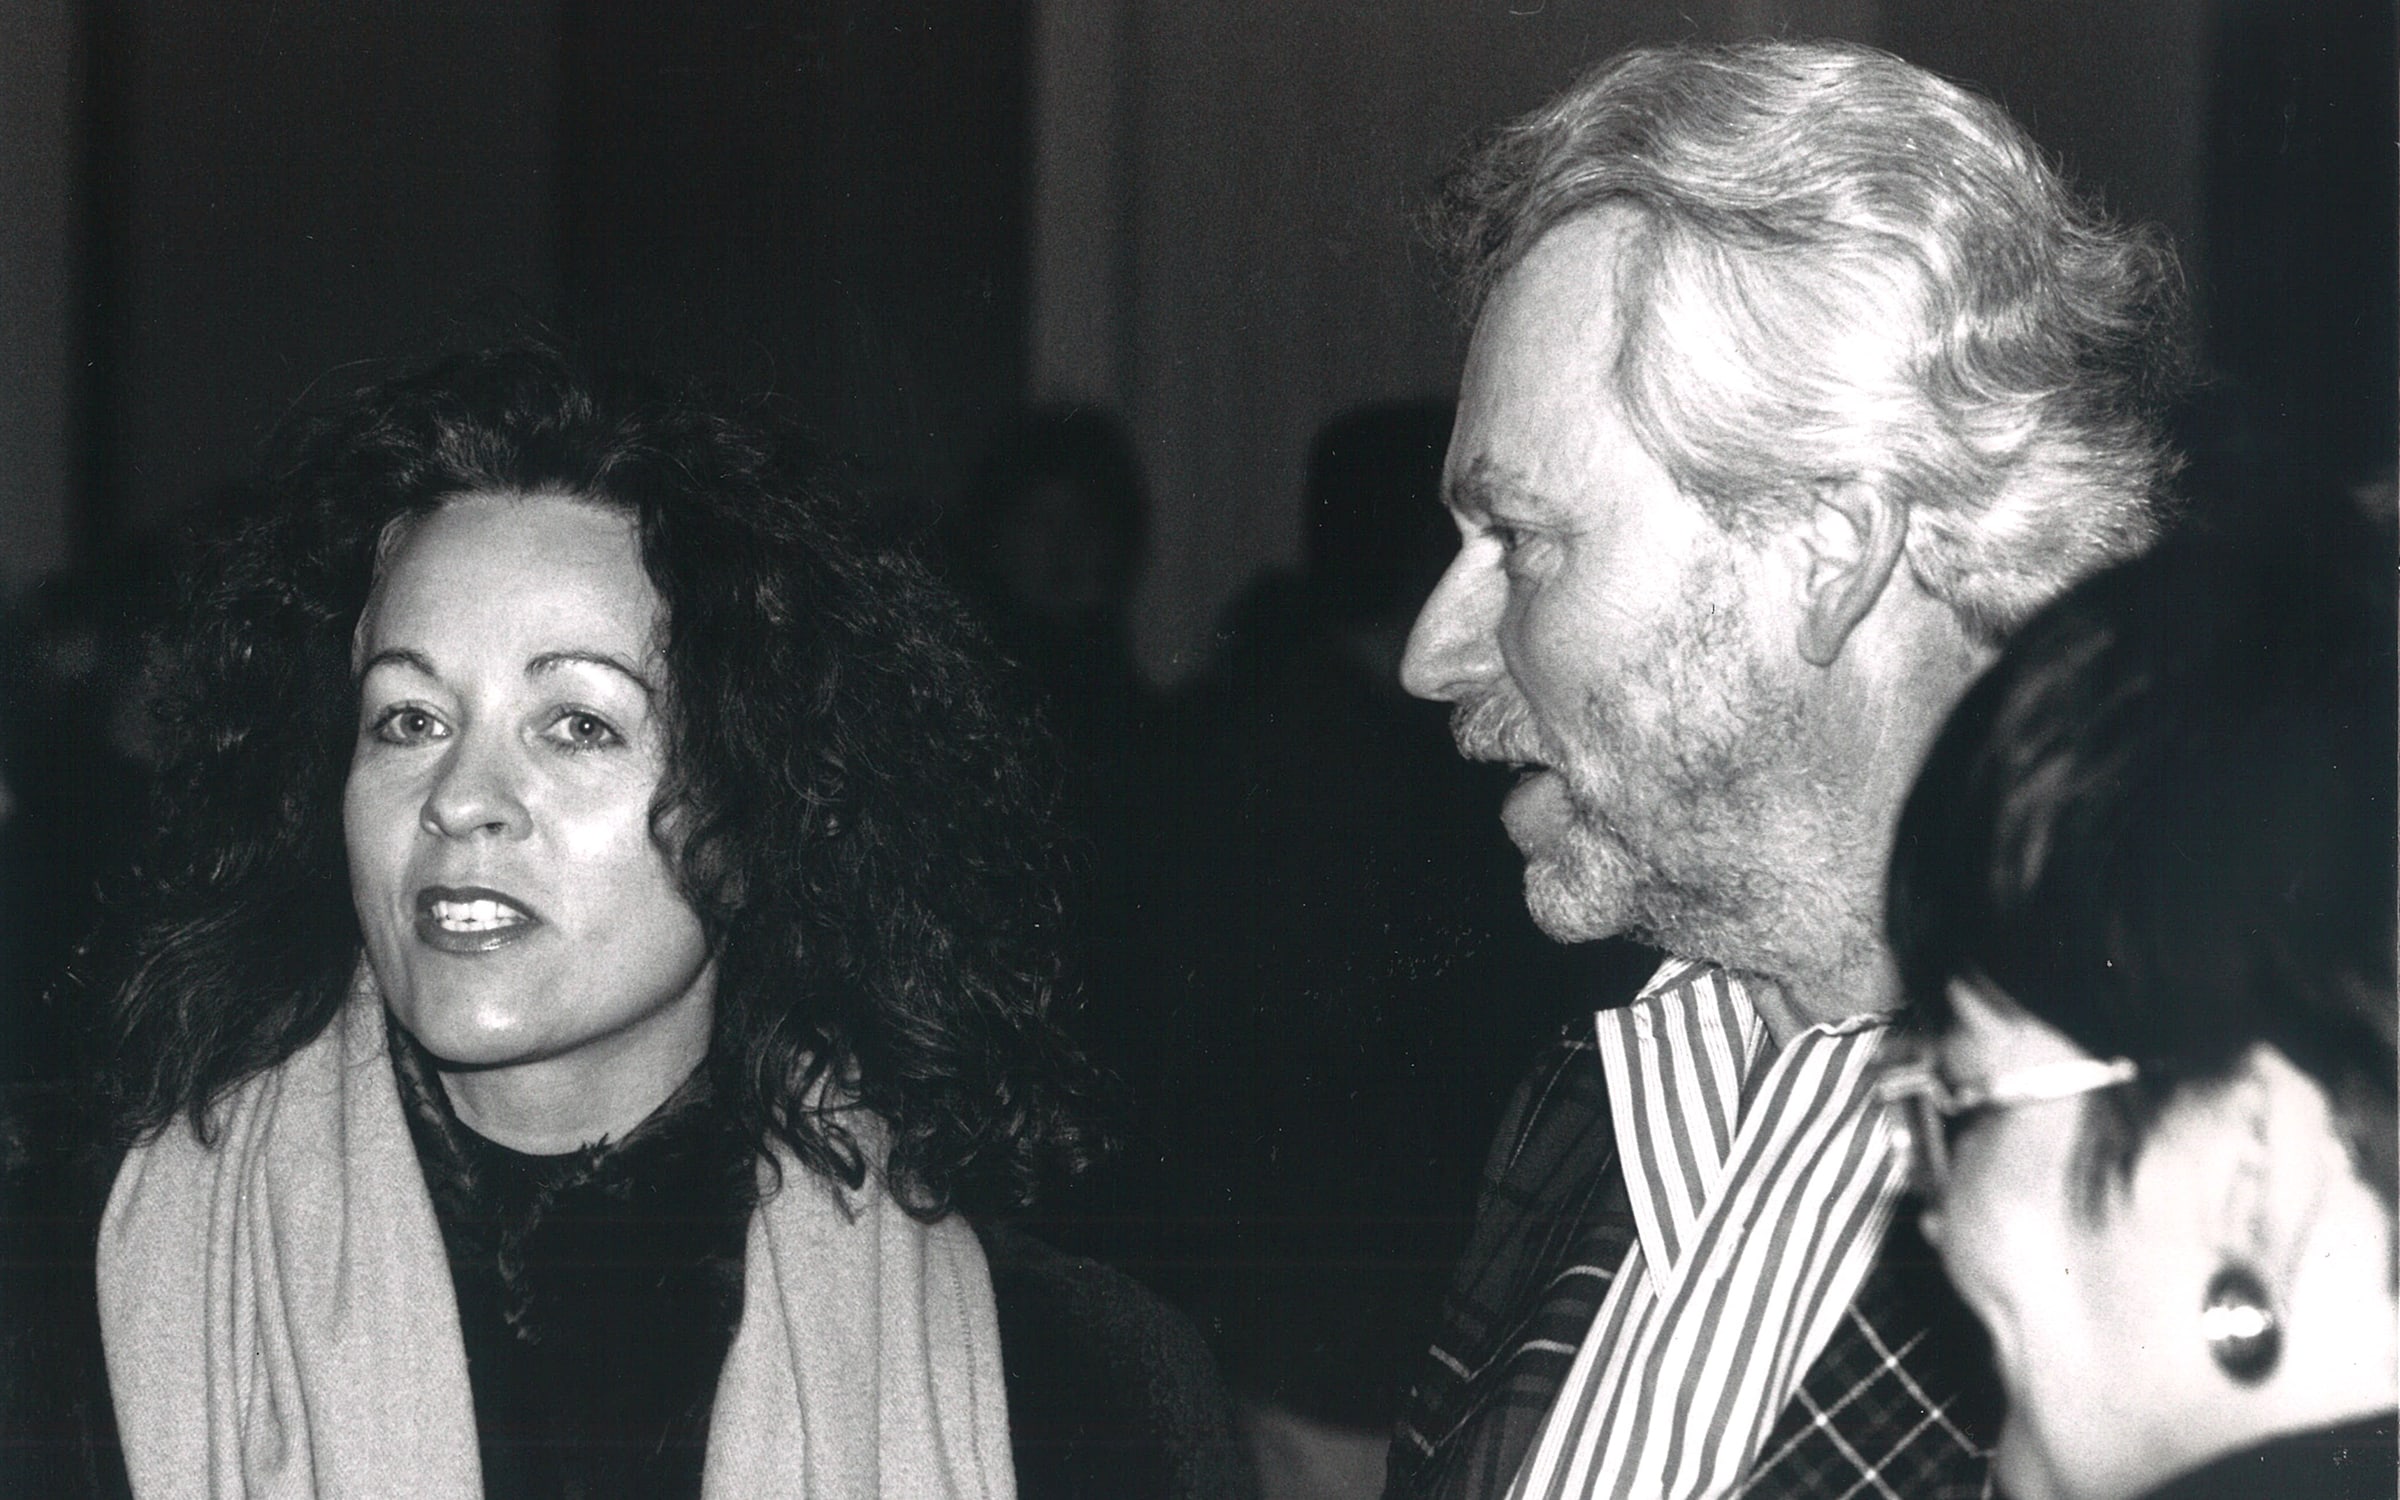 Rosemarie Schwarzwälder and Donald Judd, 1988. Courtesy of Galerie nächst St. Stephan Rosemarie Schwarzwälder, Vienna. 